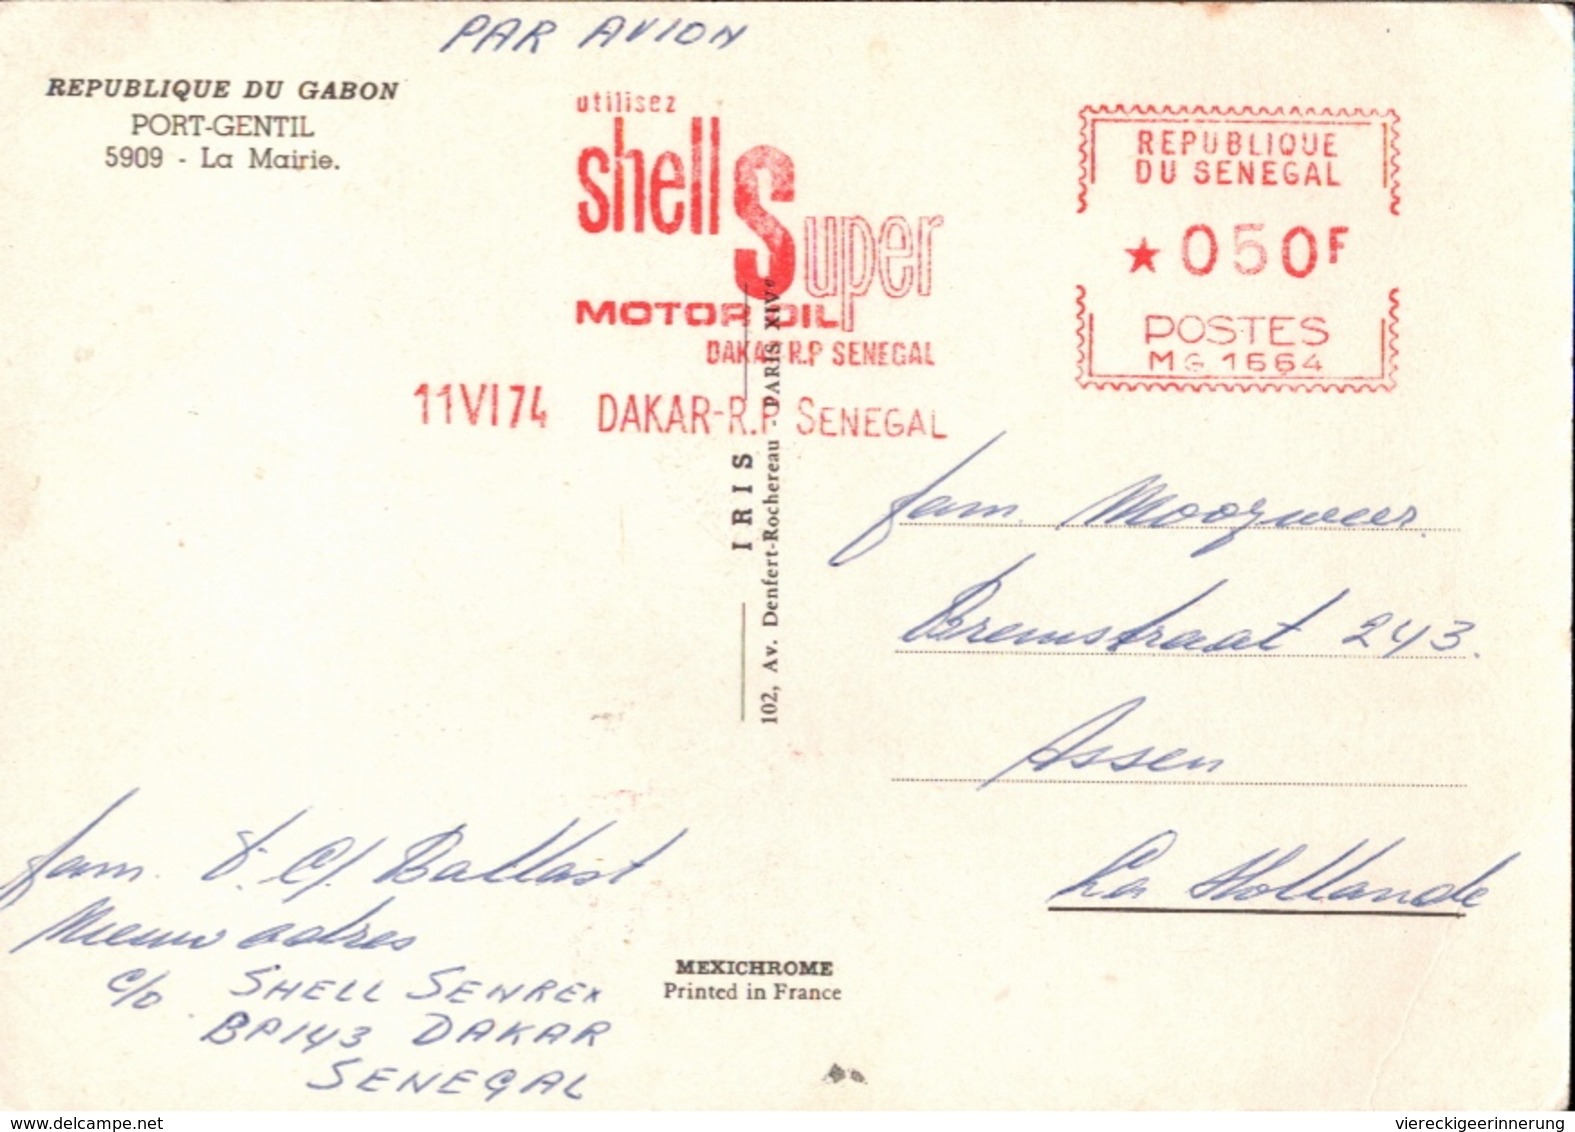 !  1974 Postcard , Port Gentil, Gabon, Freistempel Dakar, Senegal, Shell Super Motor Oil, Cachet Francotype Meter Cancel - Sénégal (1960-...)